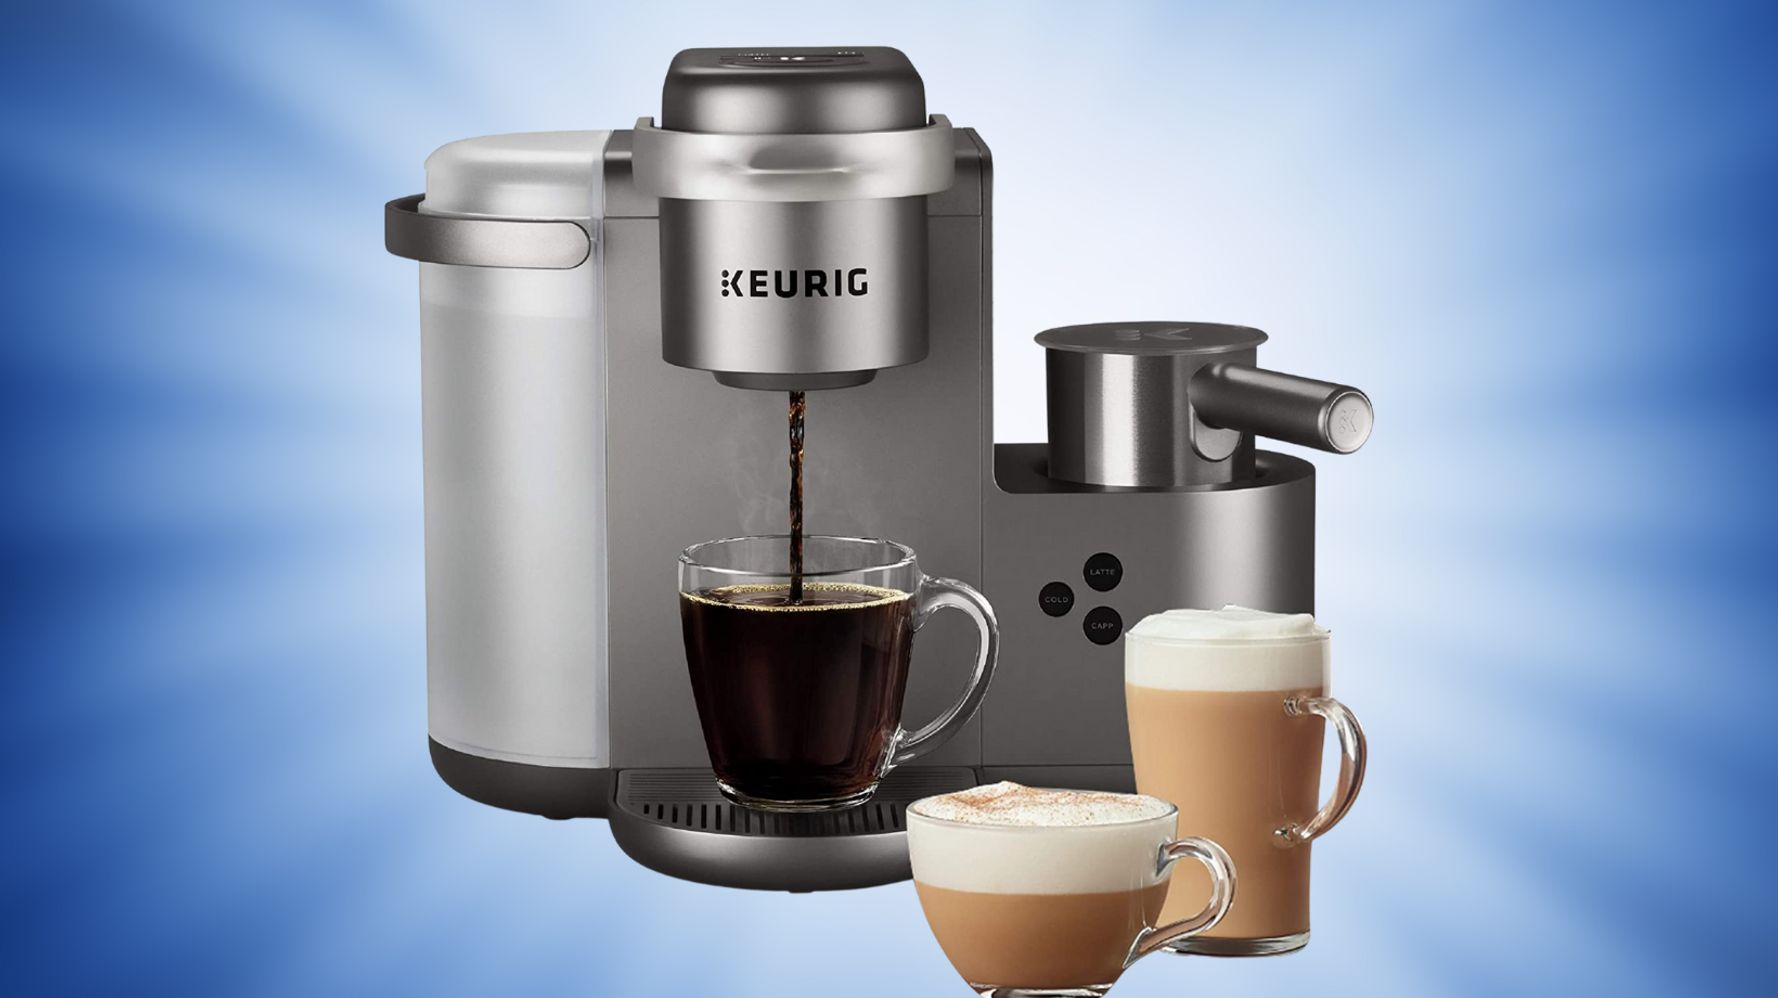 Filter-less centrifuge-based smart coffee maker.